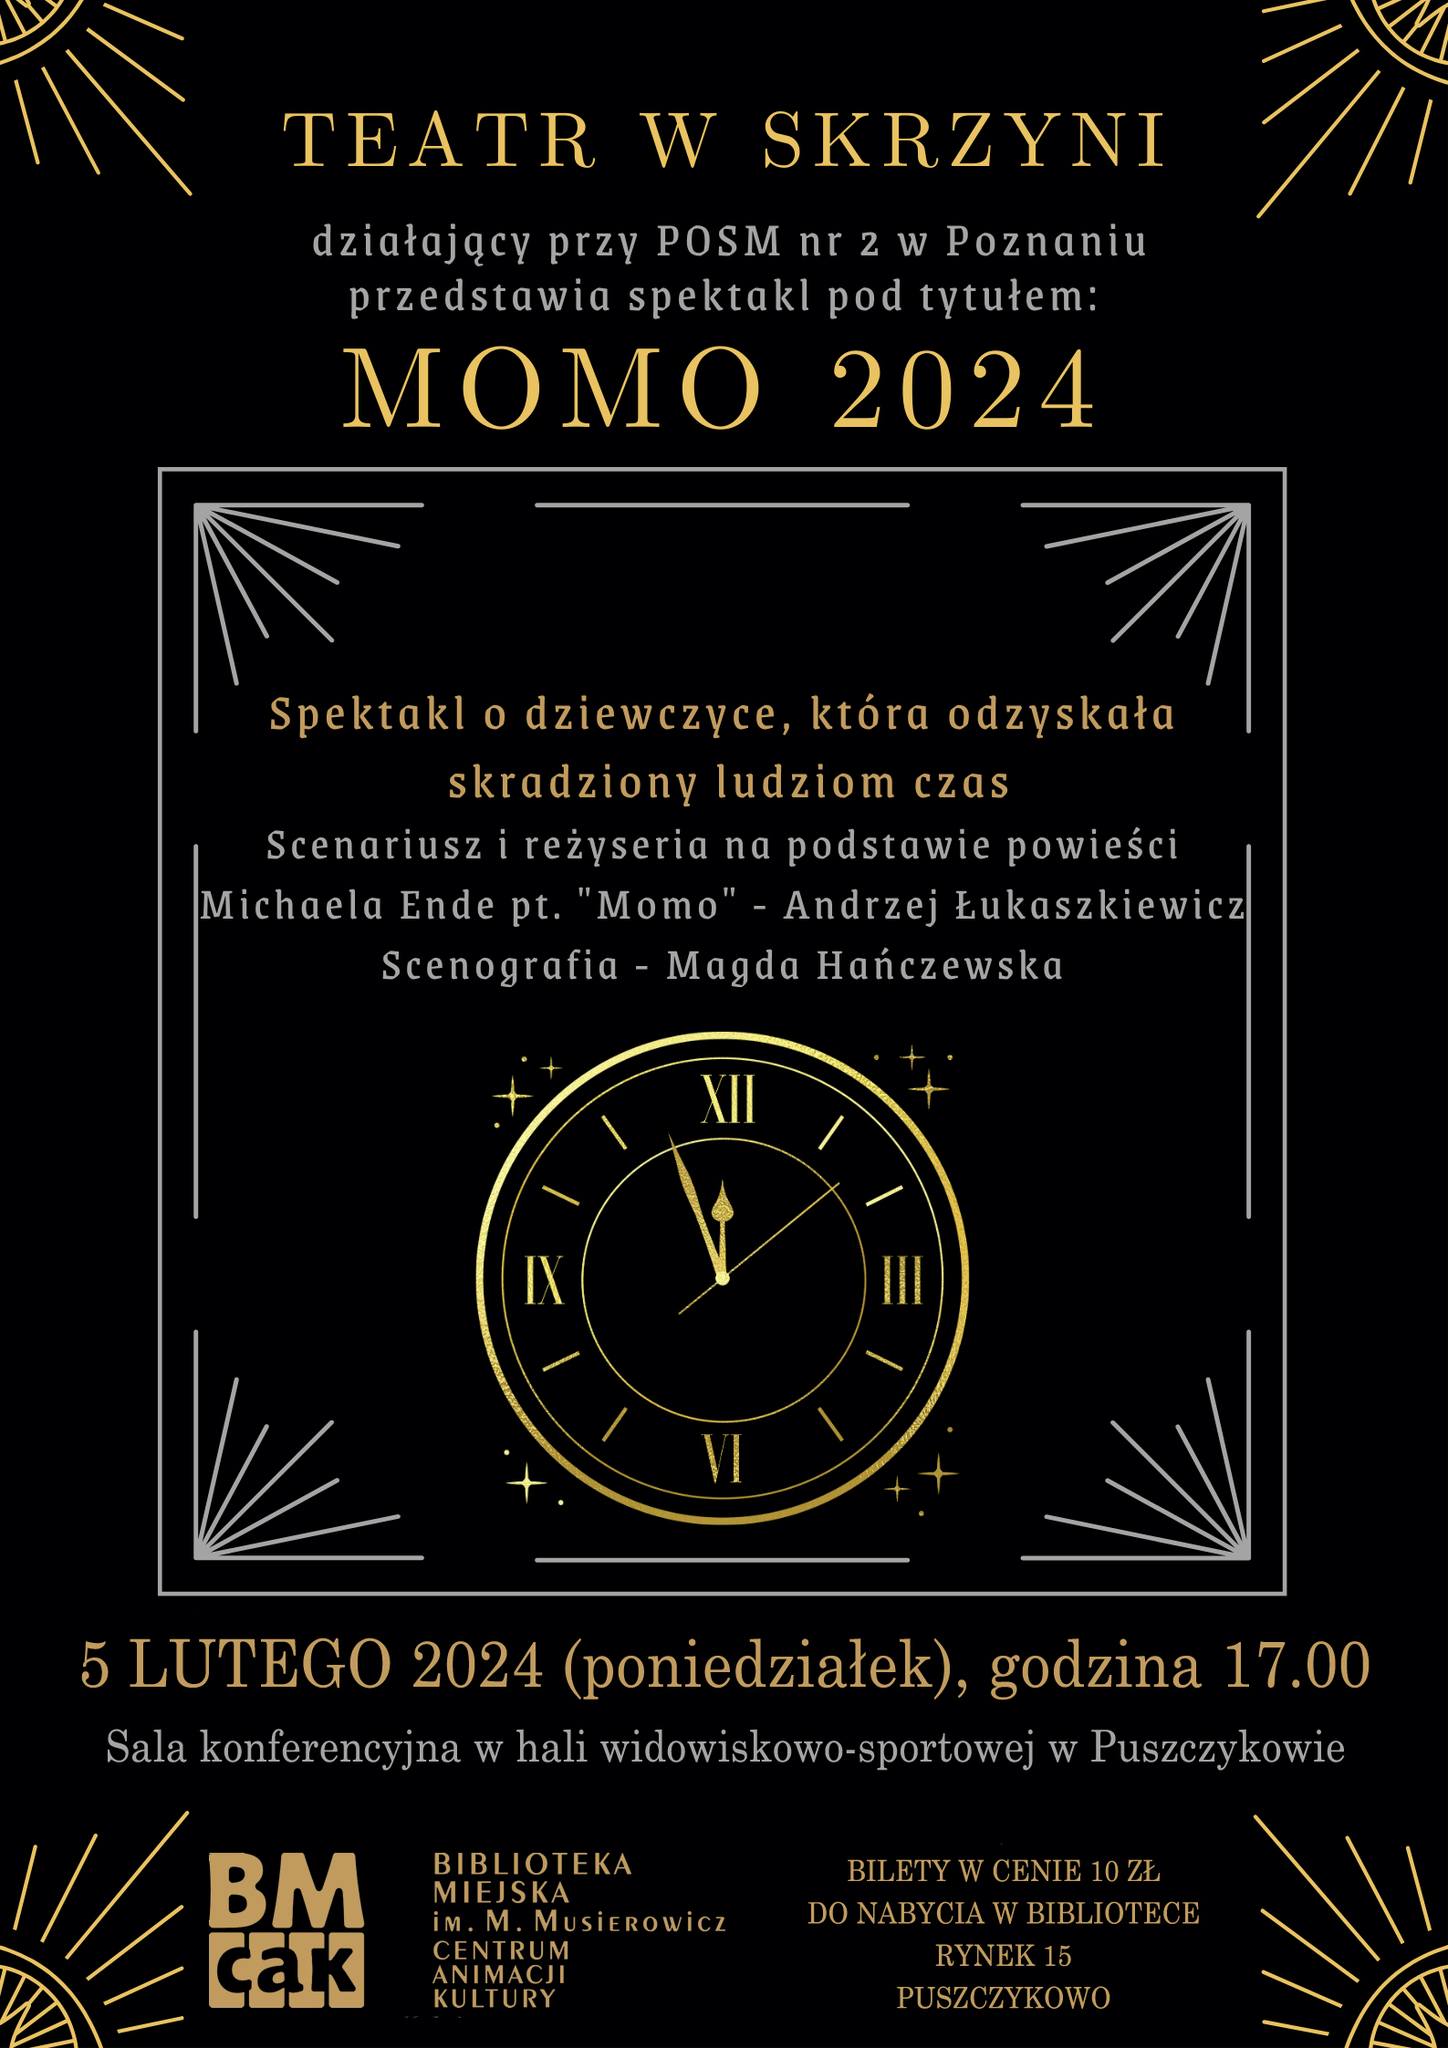 MOMO 2024 - spektakl